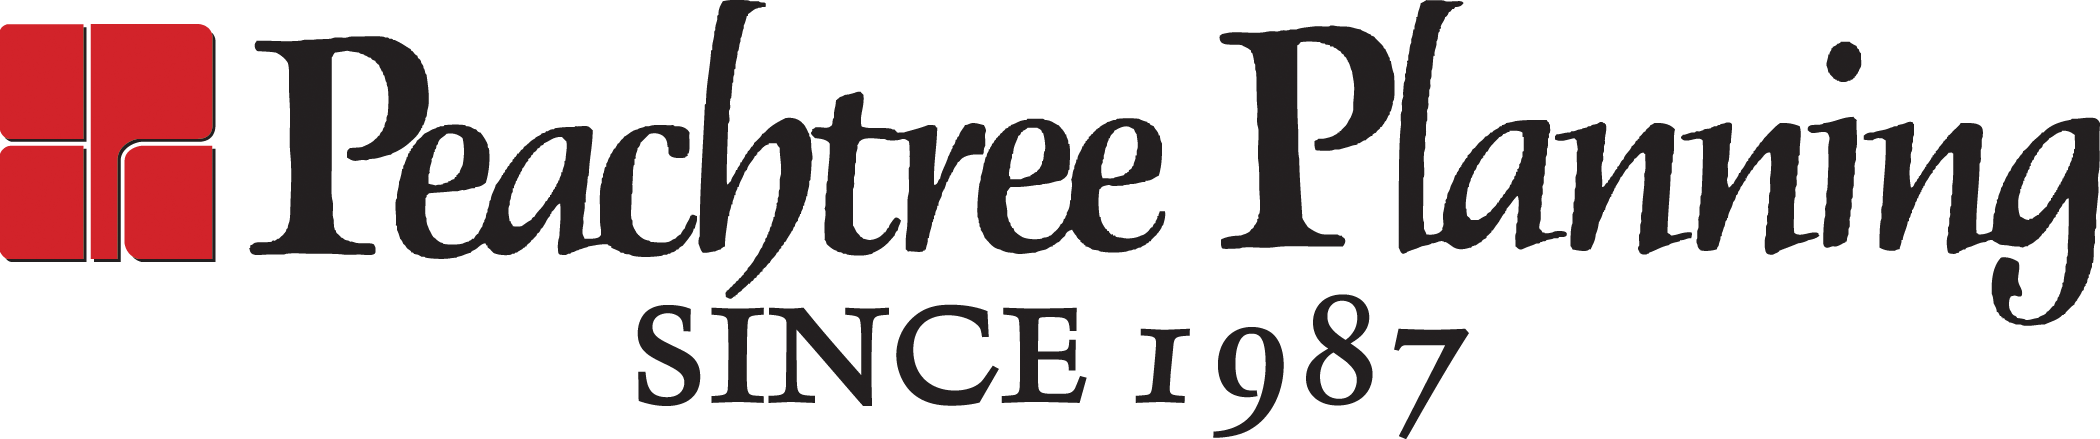 Peachtree Planning logo